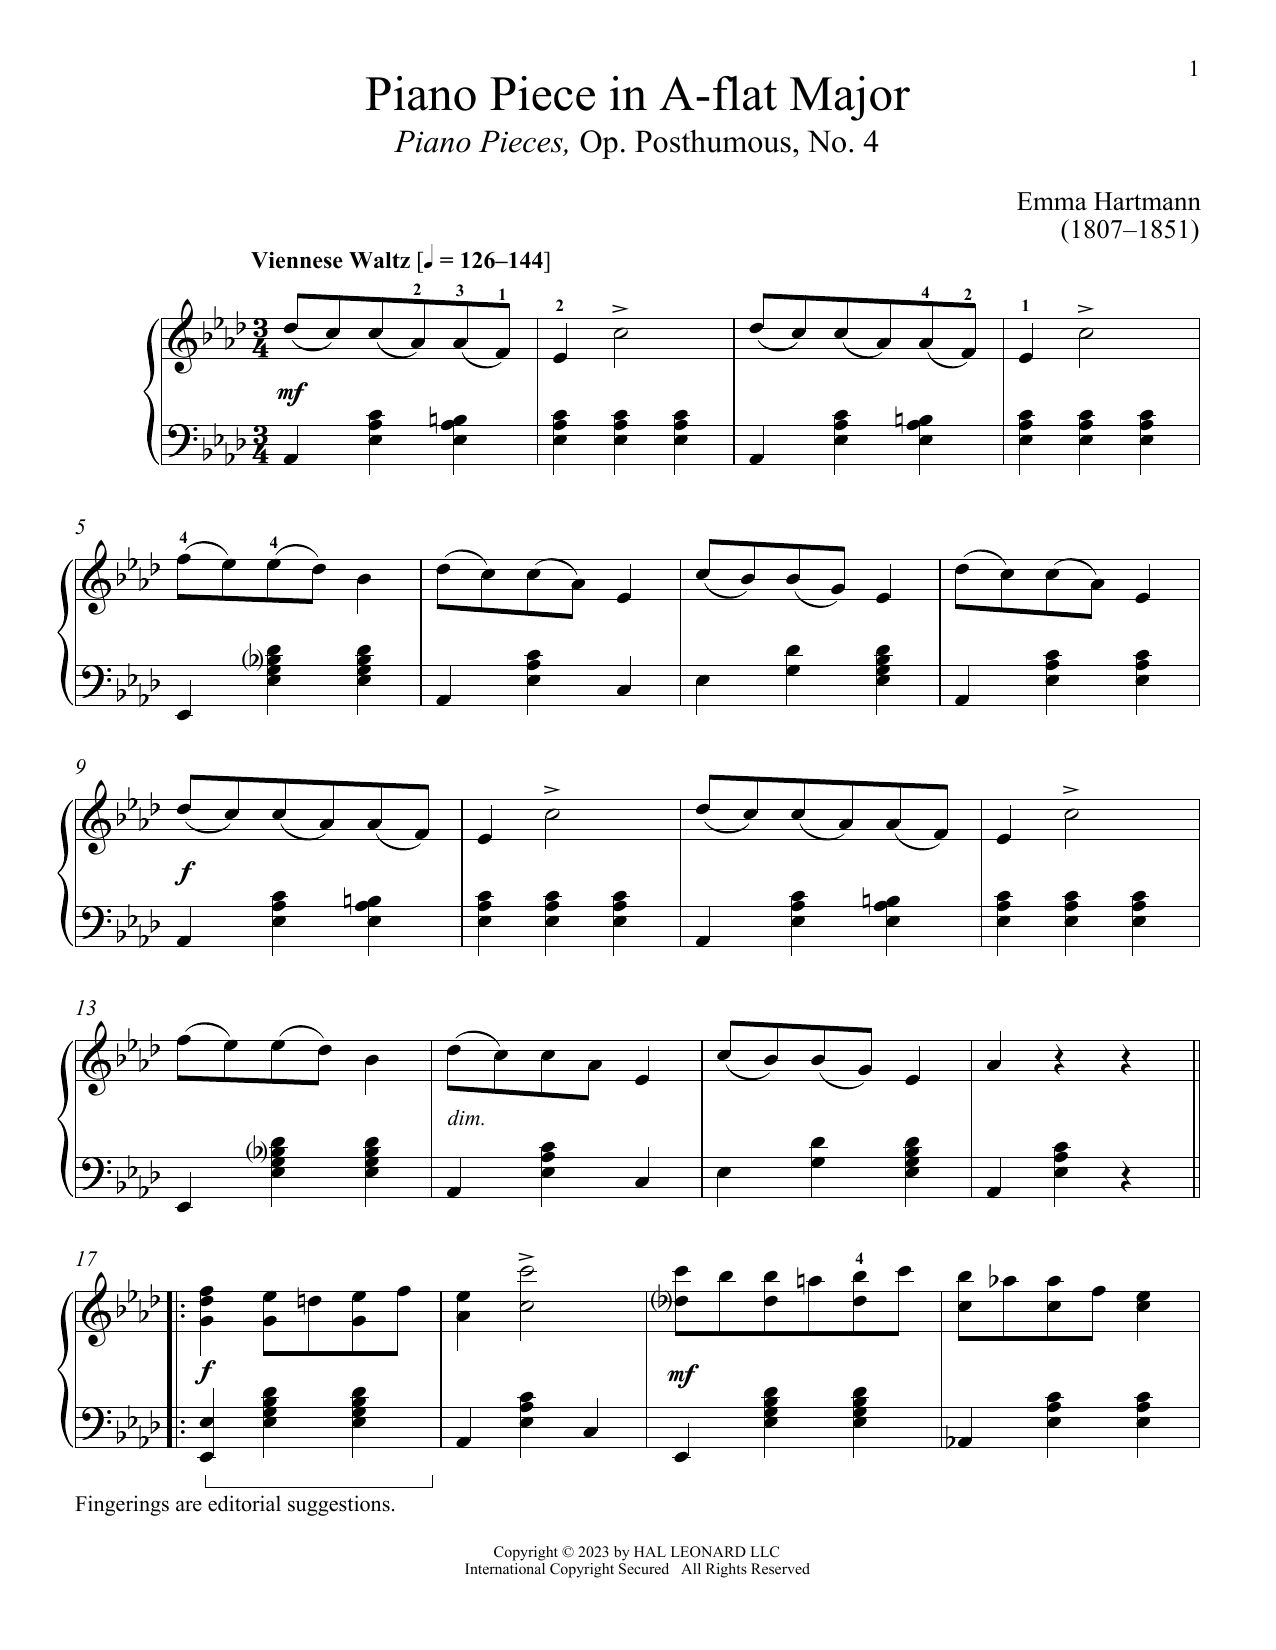 Download Emma Hartmann Piano Piece in A-flat Major Sheet Music